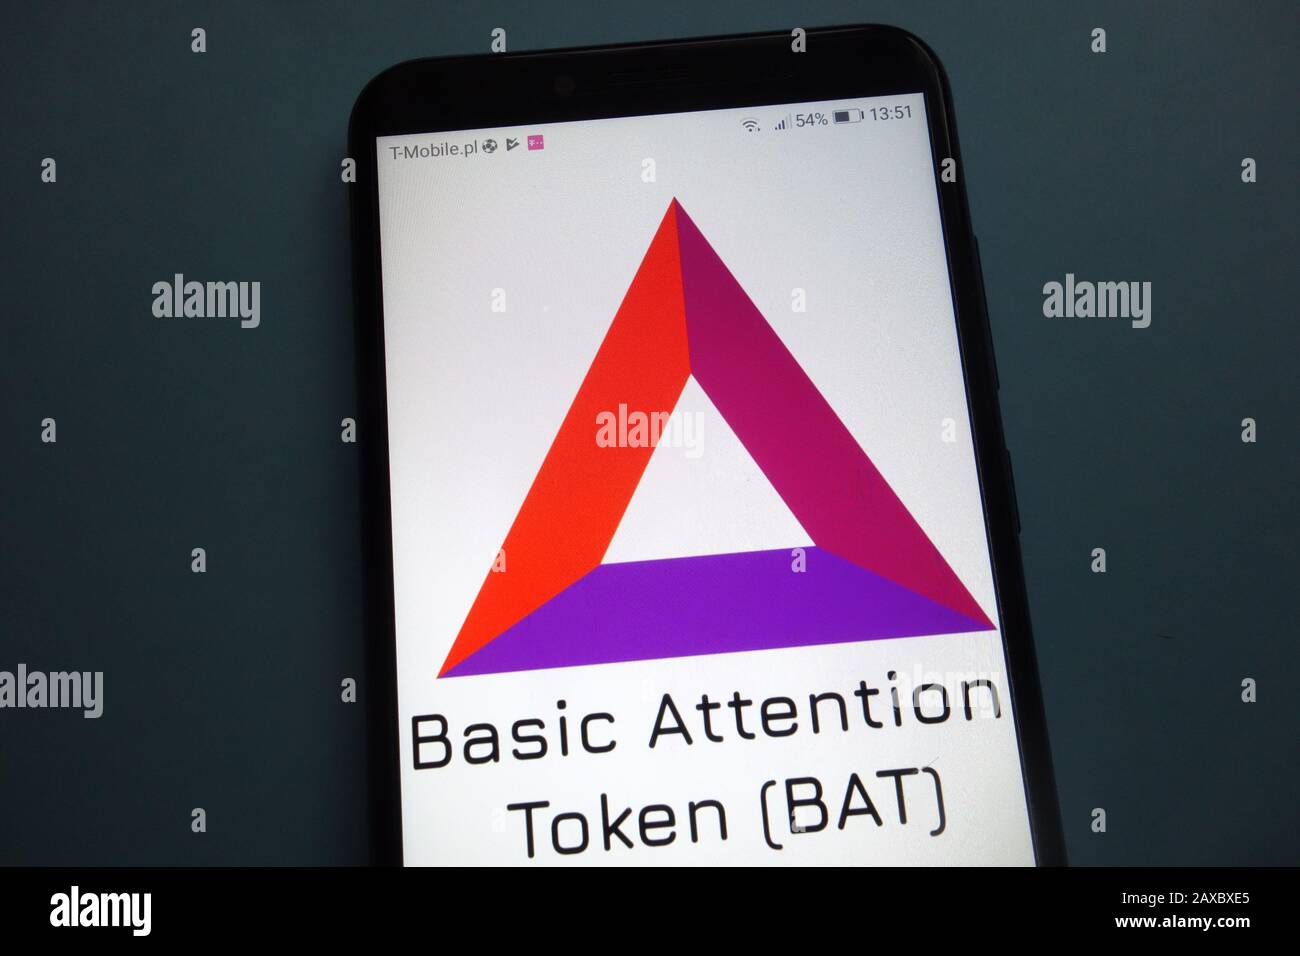 Basic Attention Token (BAT) logo on smartphone Stock Photo